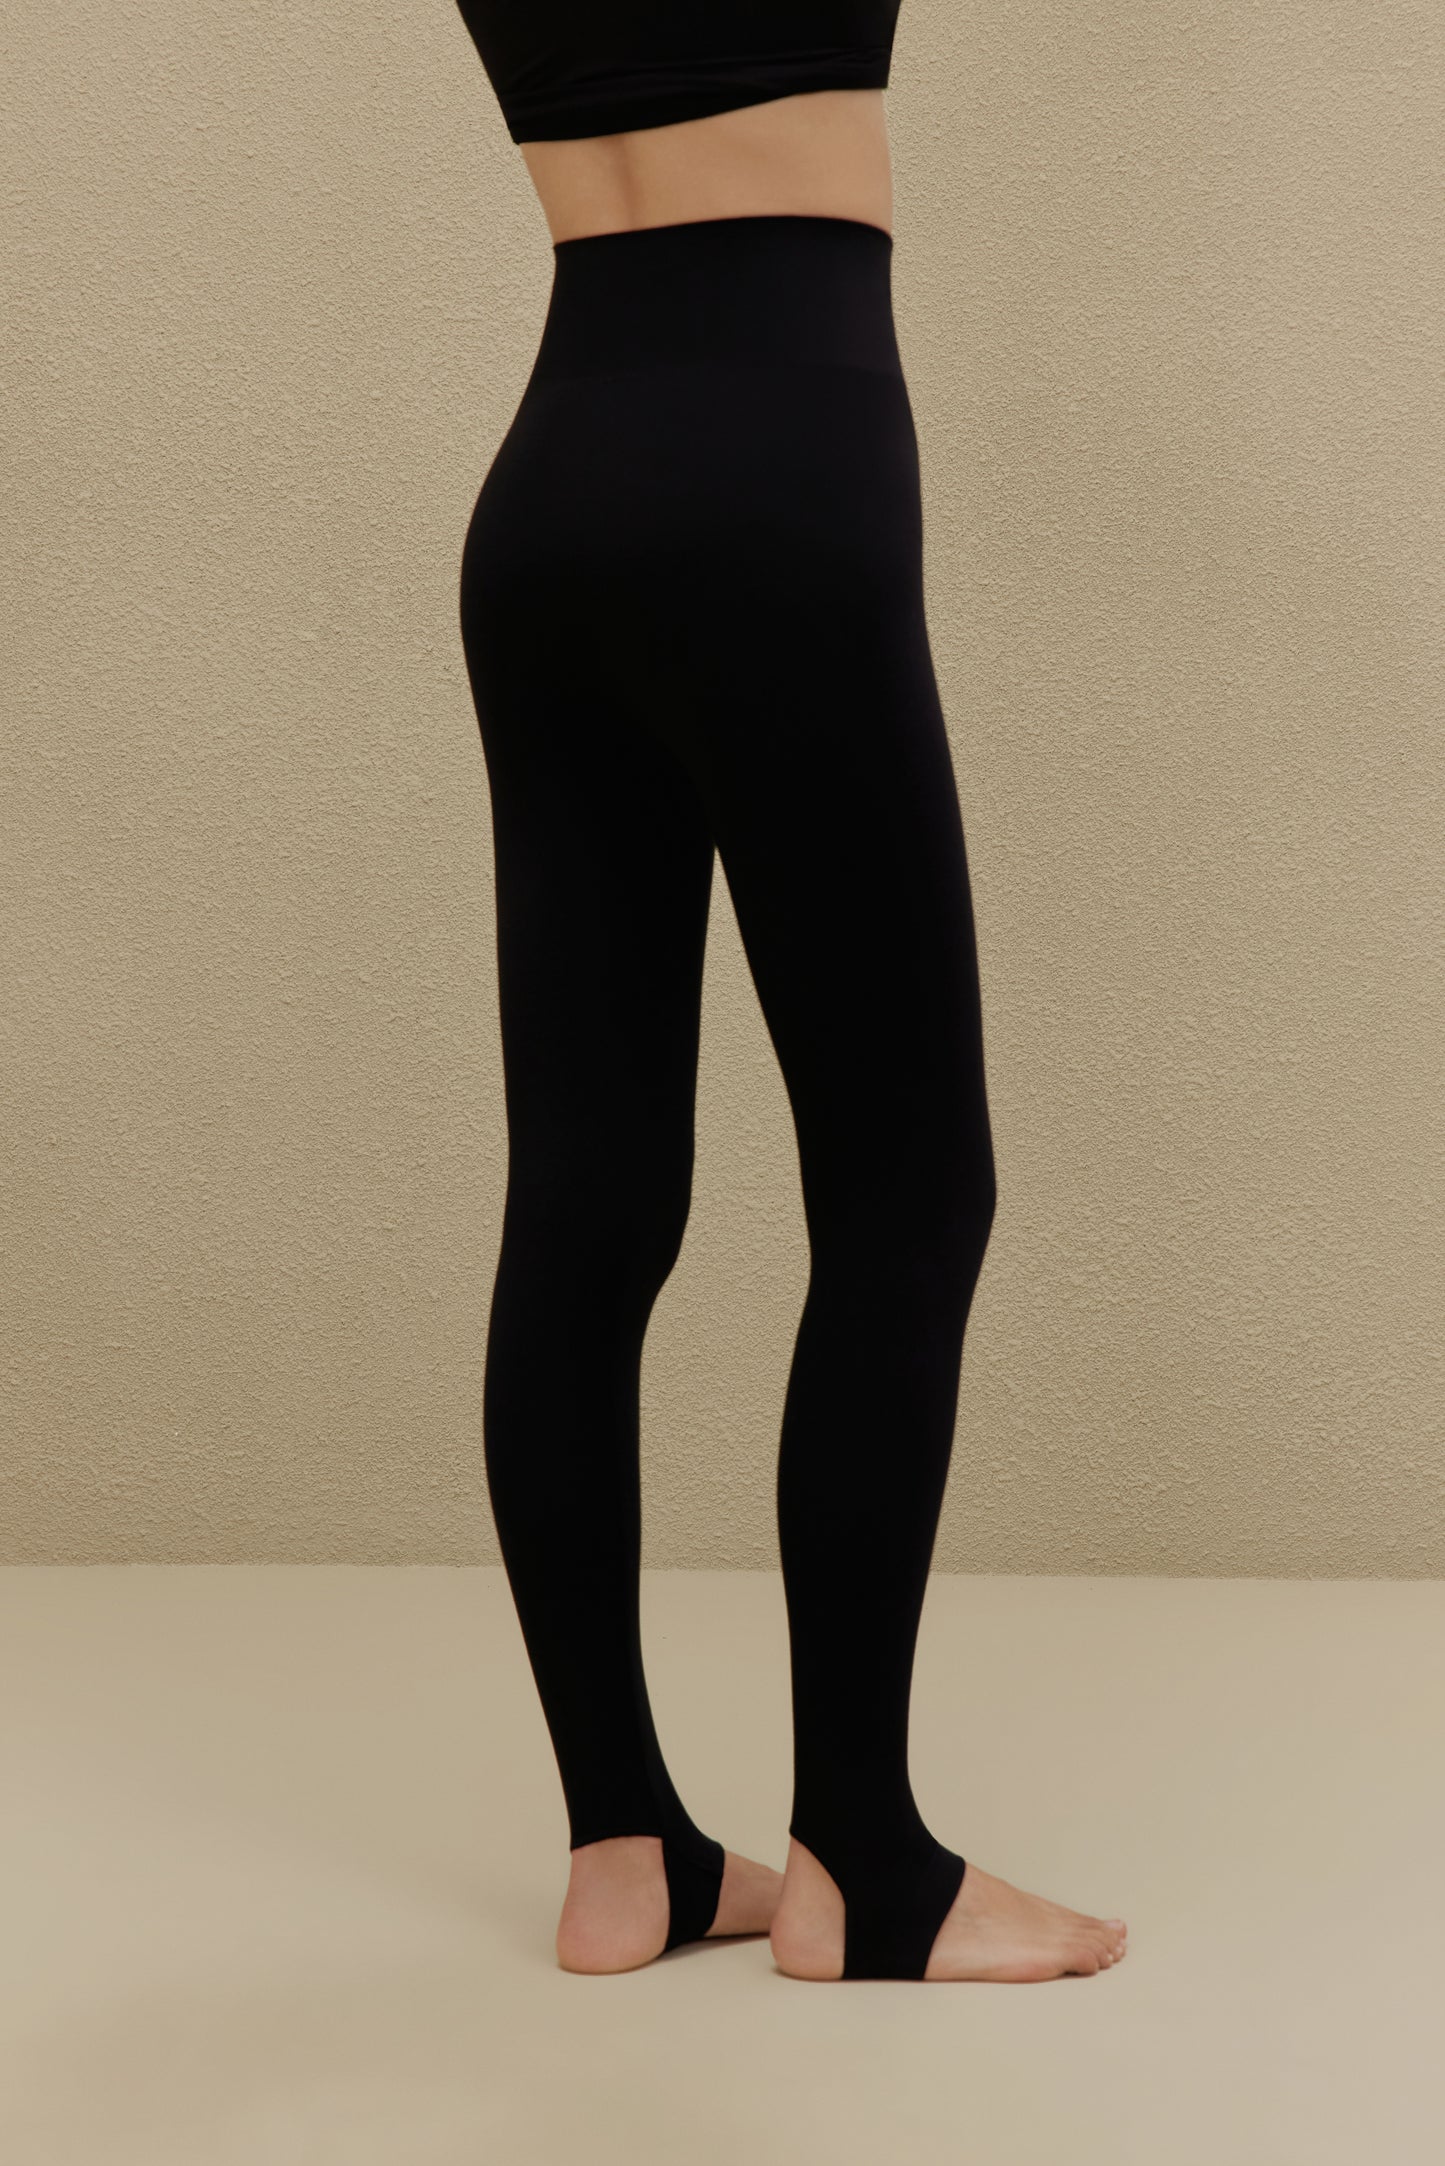 woman wearing a black stirrup leggings